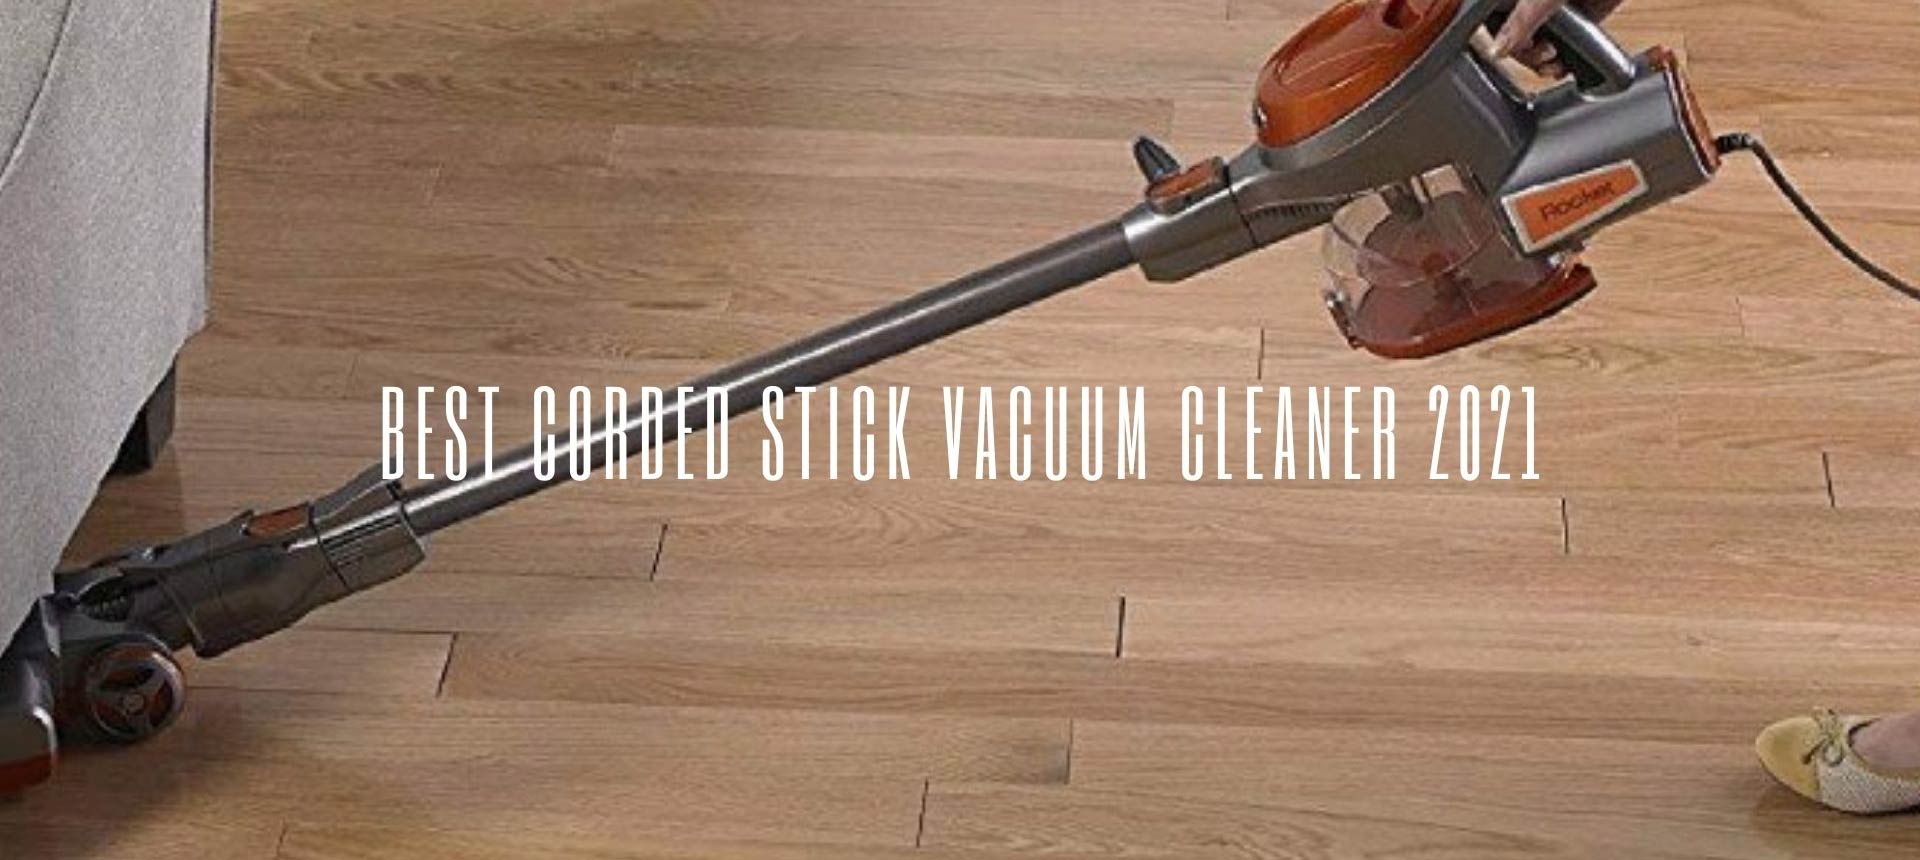 Corded Stick Vacuum Cleaner Of 2021, Best Corded Stick Vacuum For Hardwood Floors